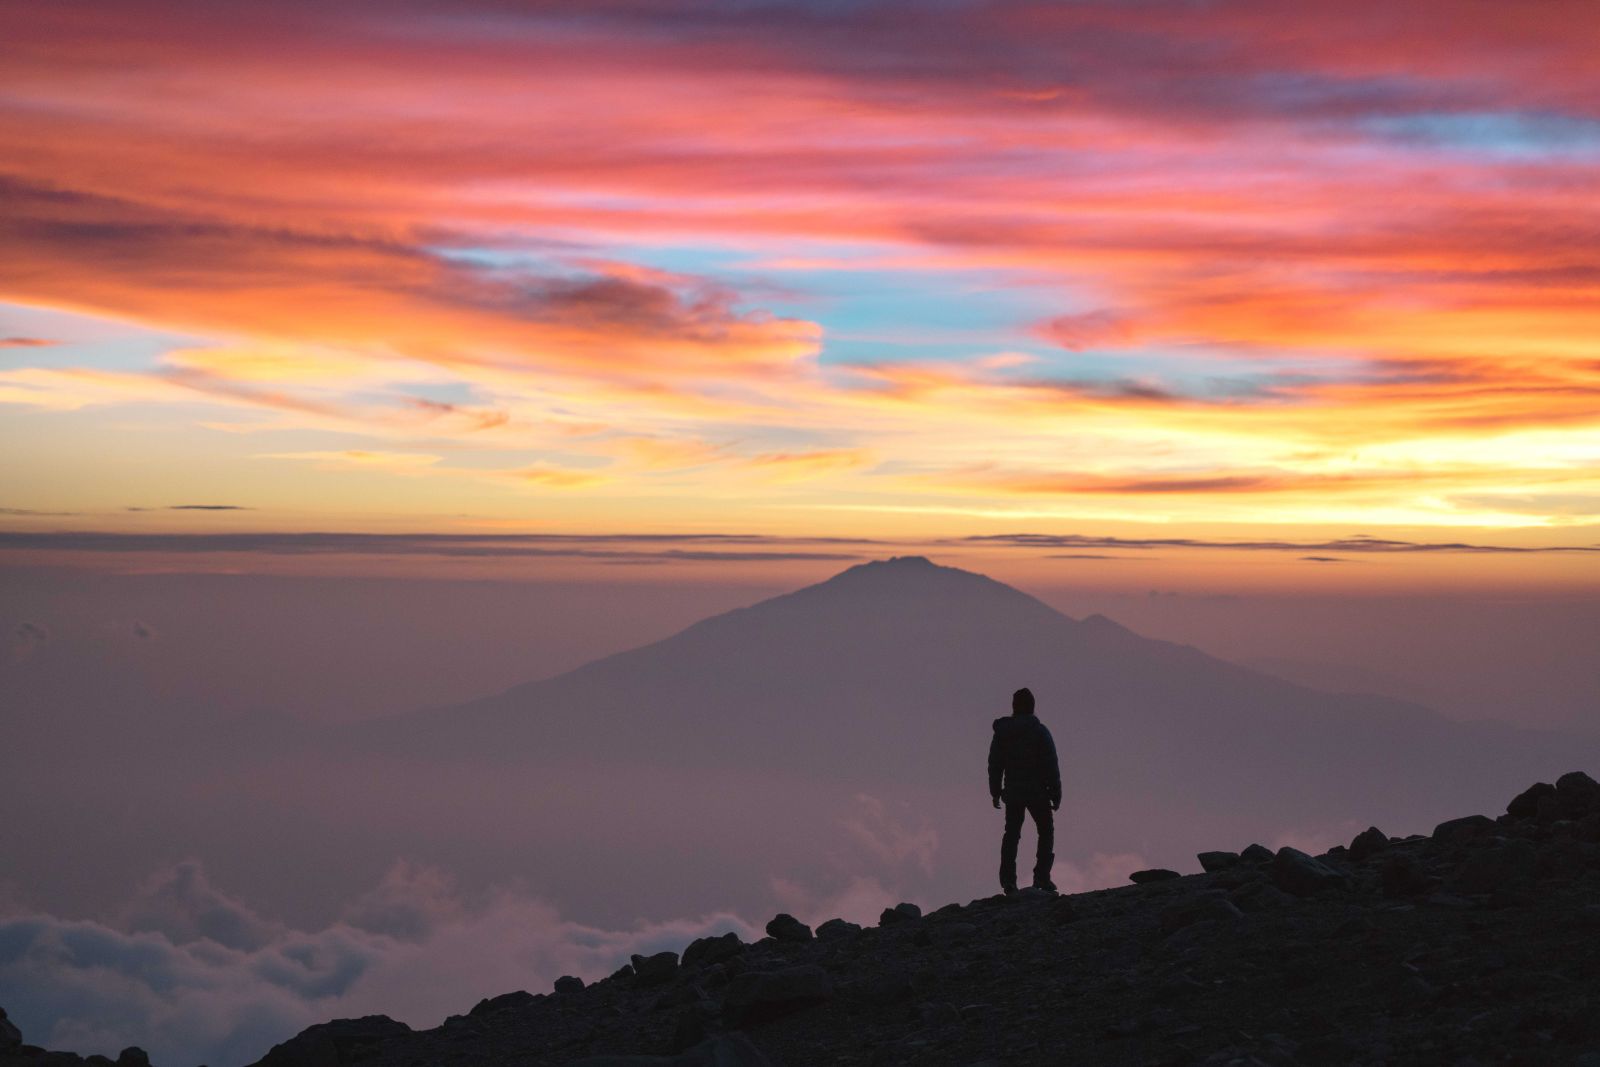 Jackson at the peak of Kilimanjaro at sunrise